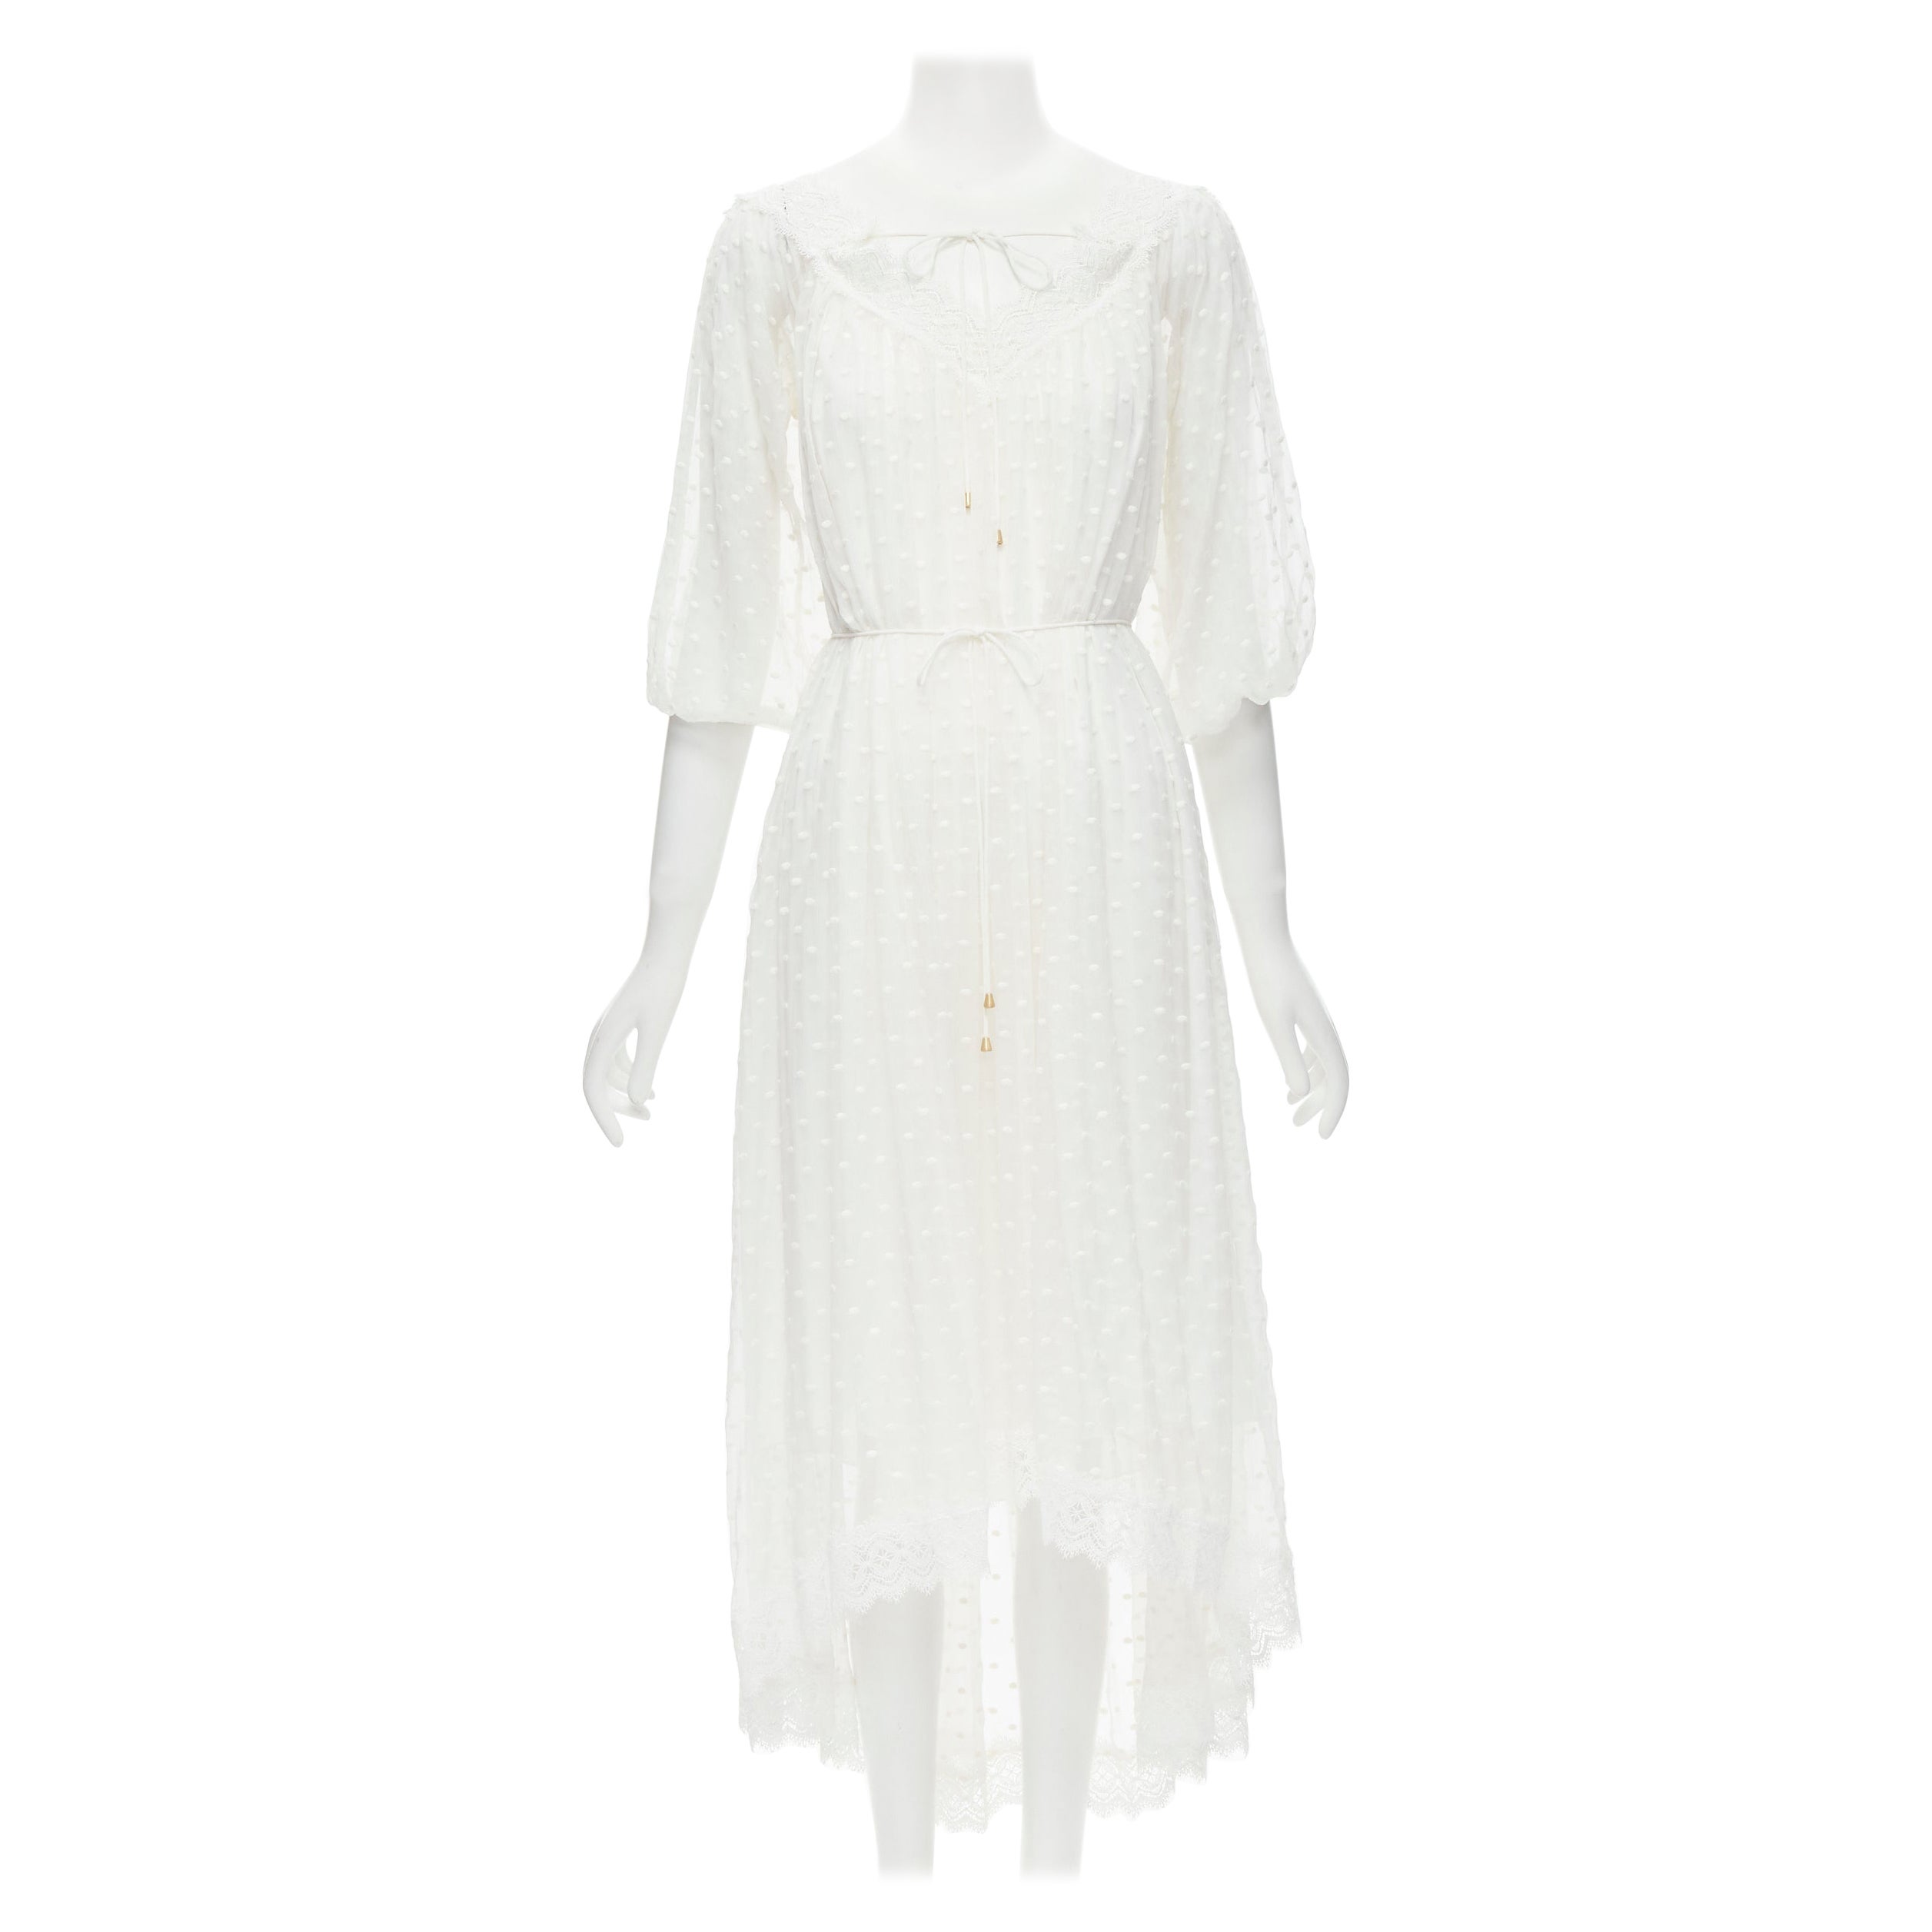 ZIMMERMAN white lace trim polka dot embroidery semi sheer boho dress US0 XS